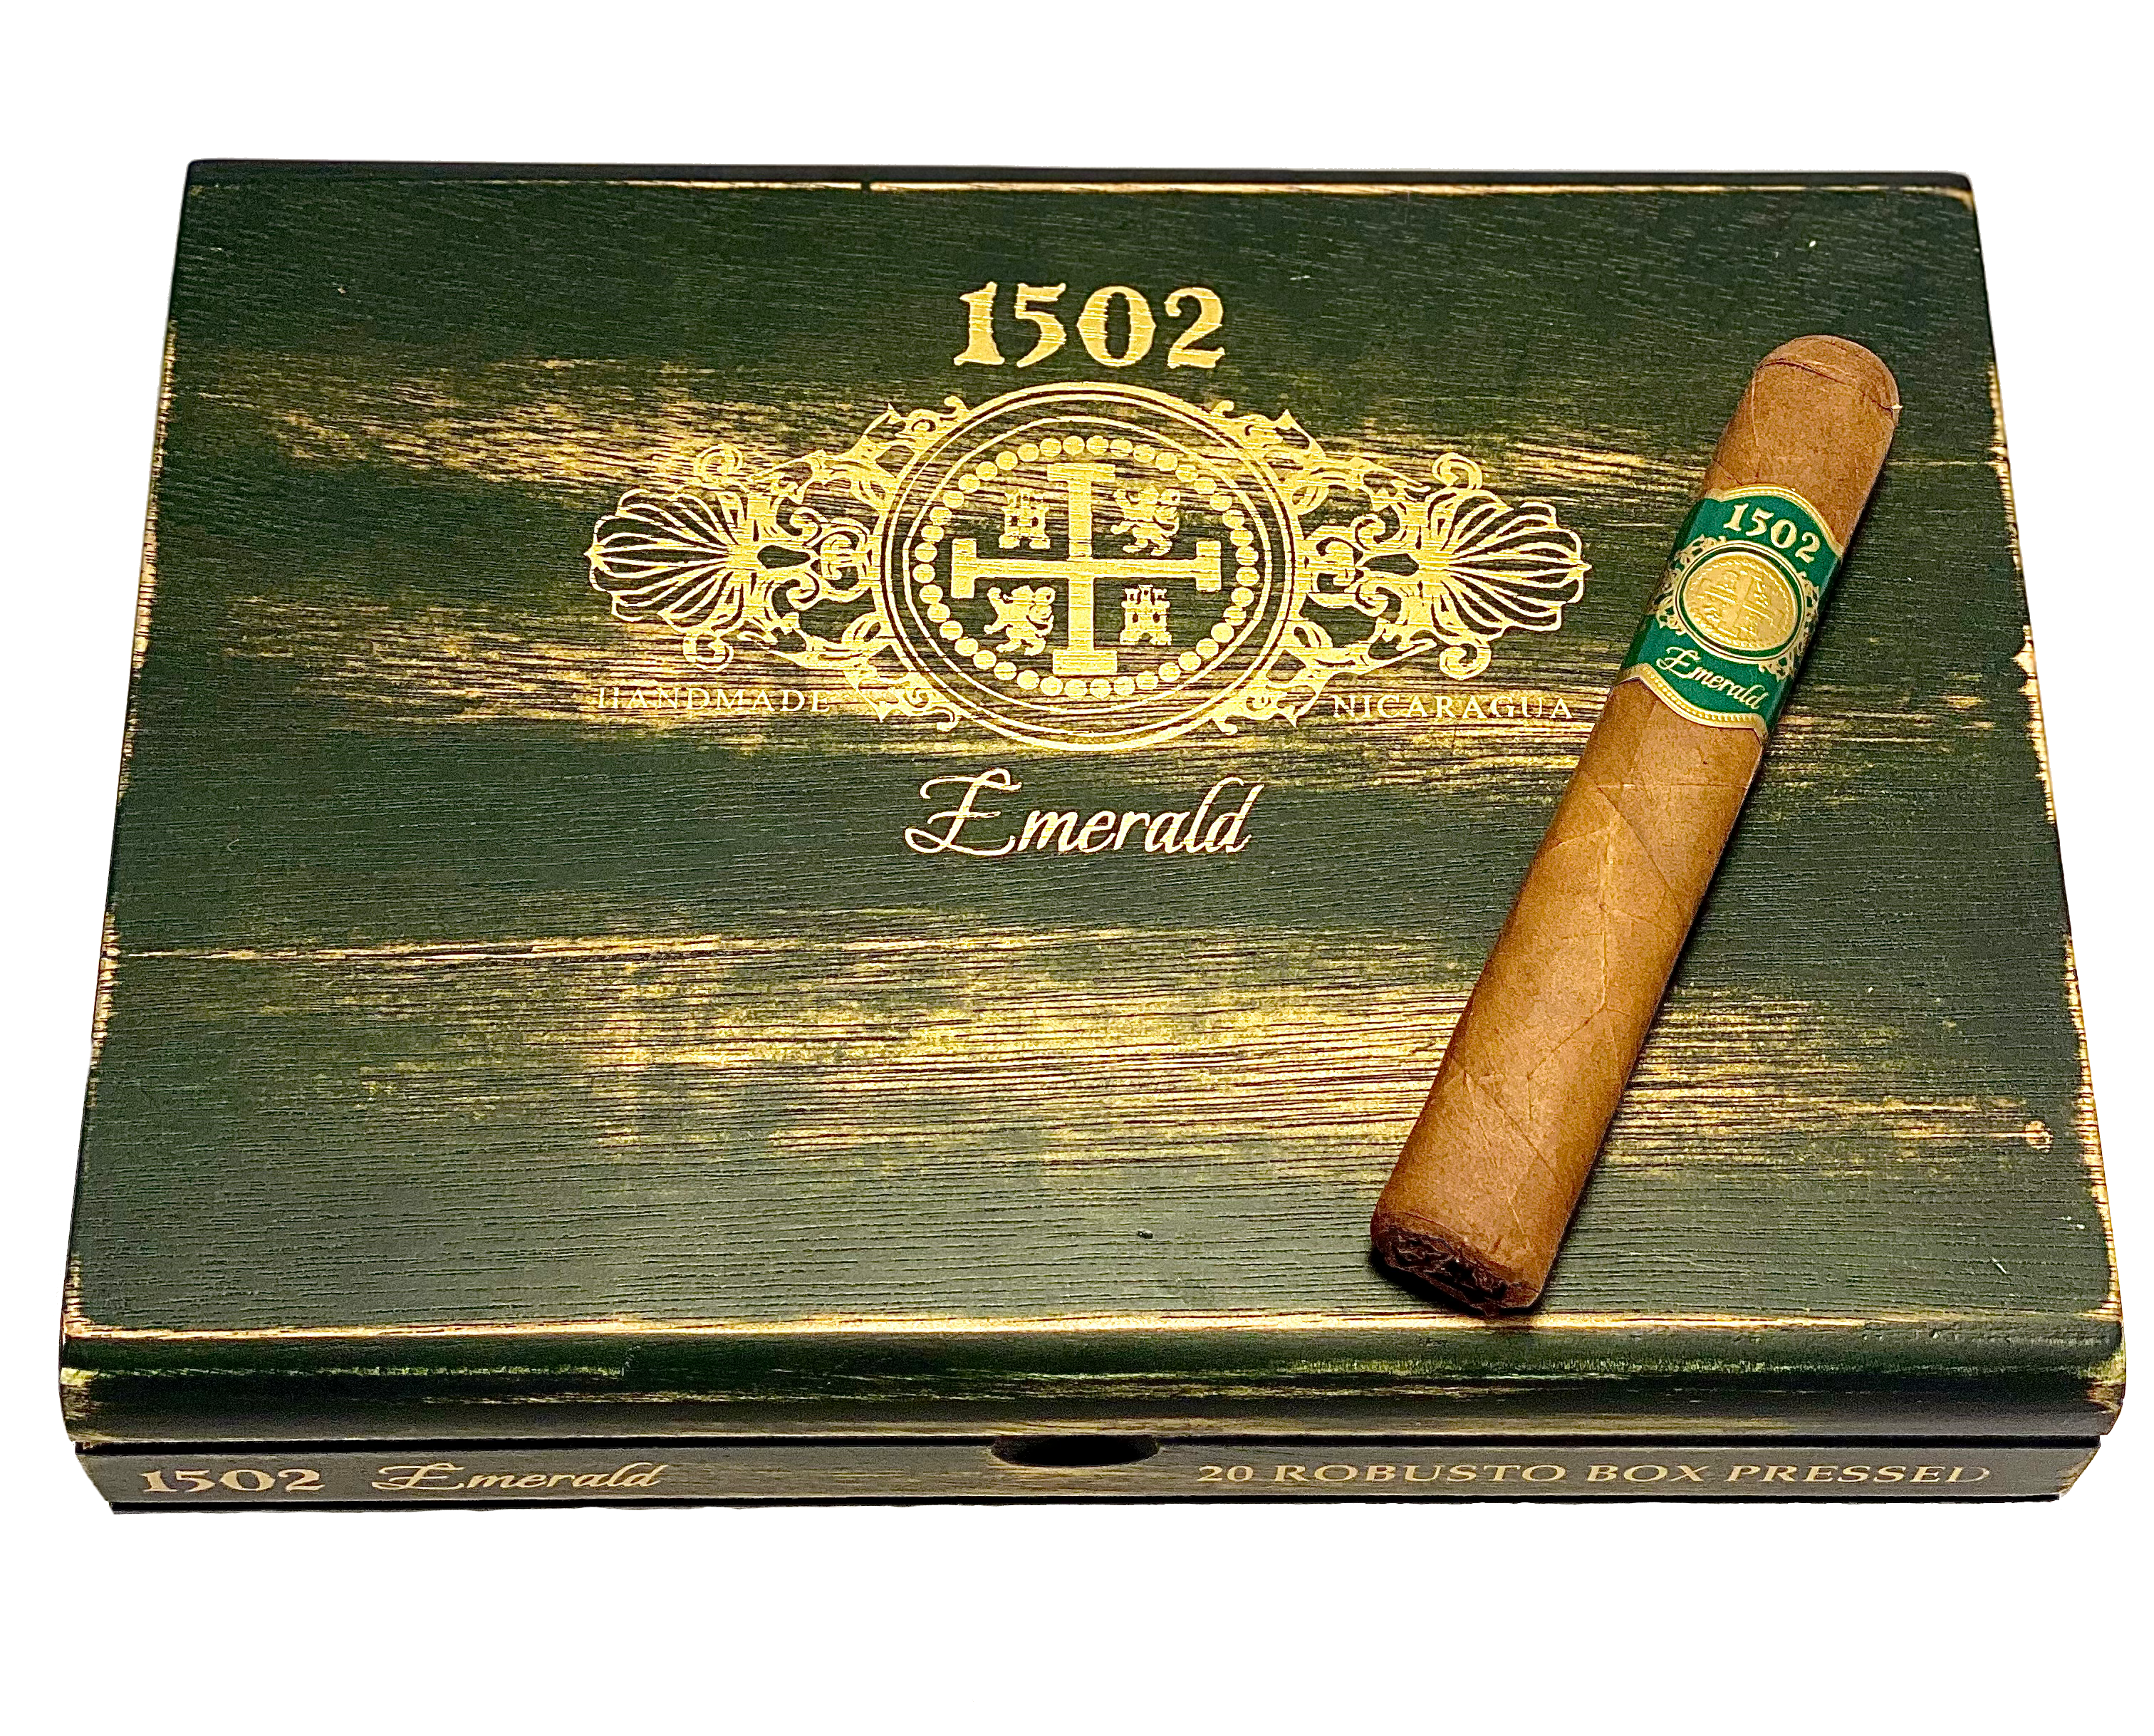 1502 Emerald